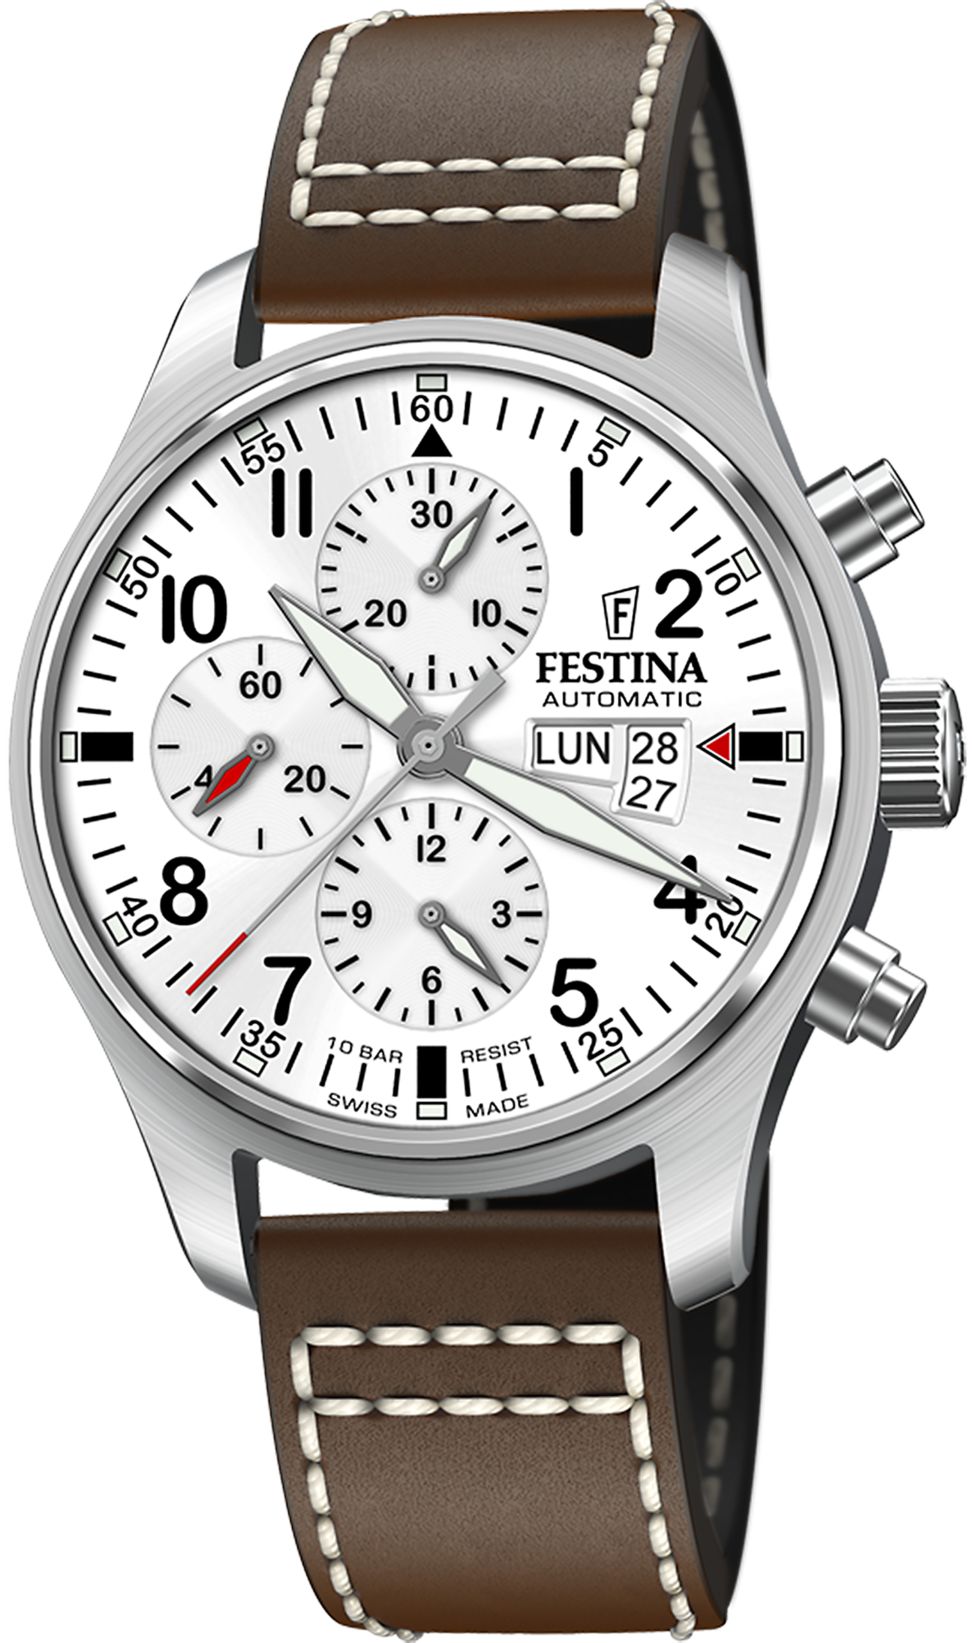 FESTINA Swiss Premium Pilot Watch Series Automatic Chronograph f20150_1 f20150/1